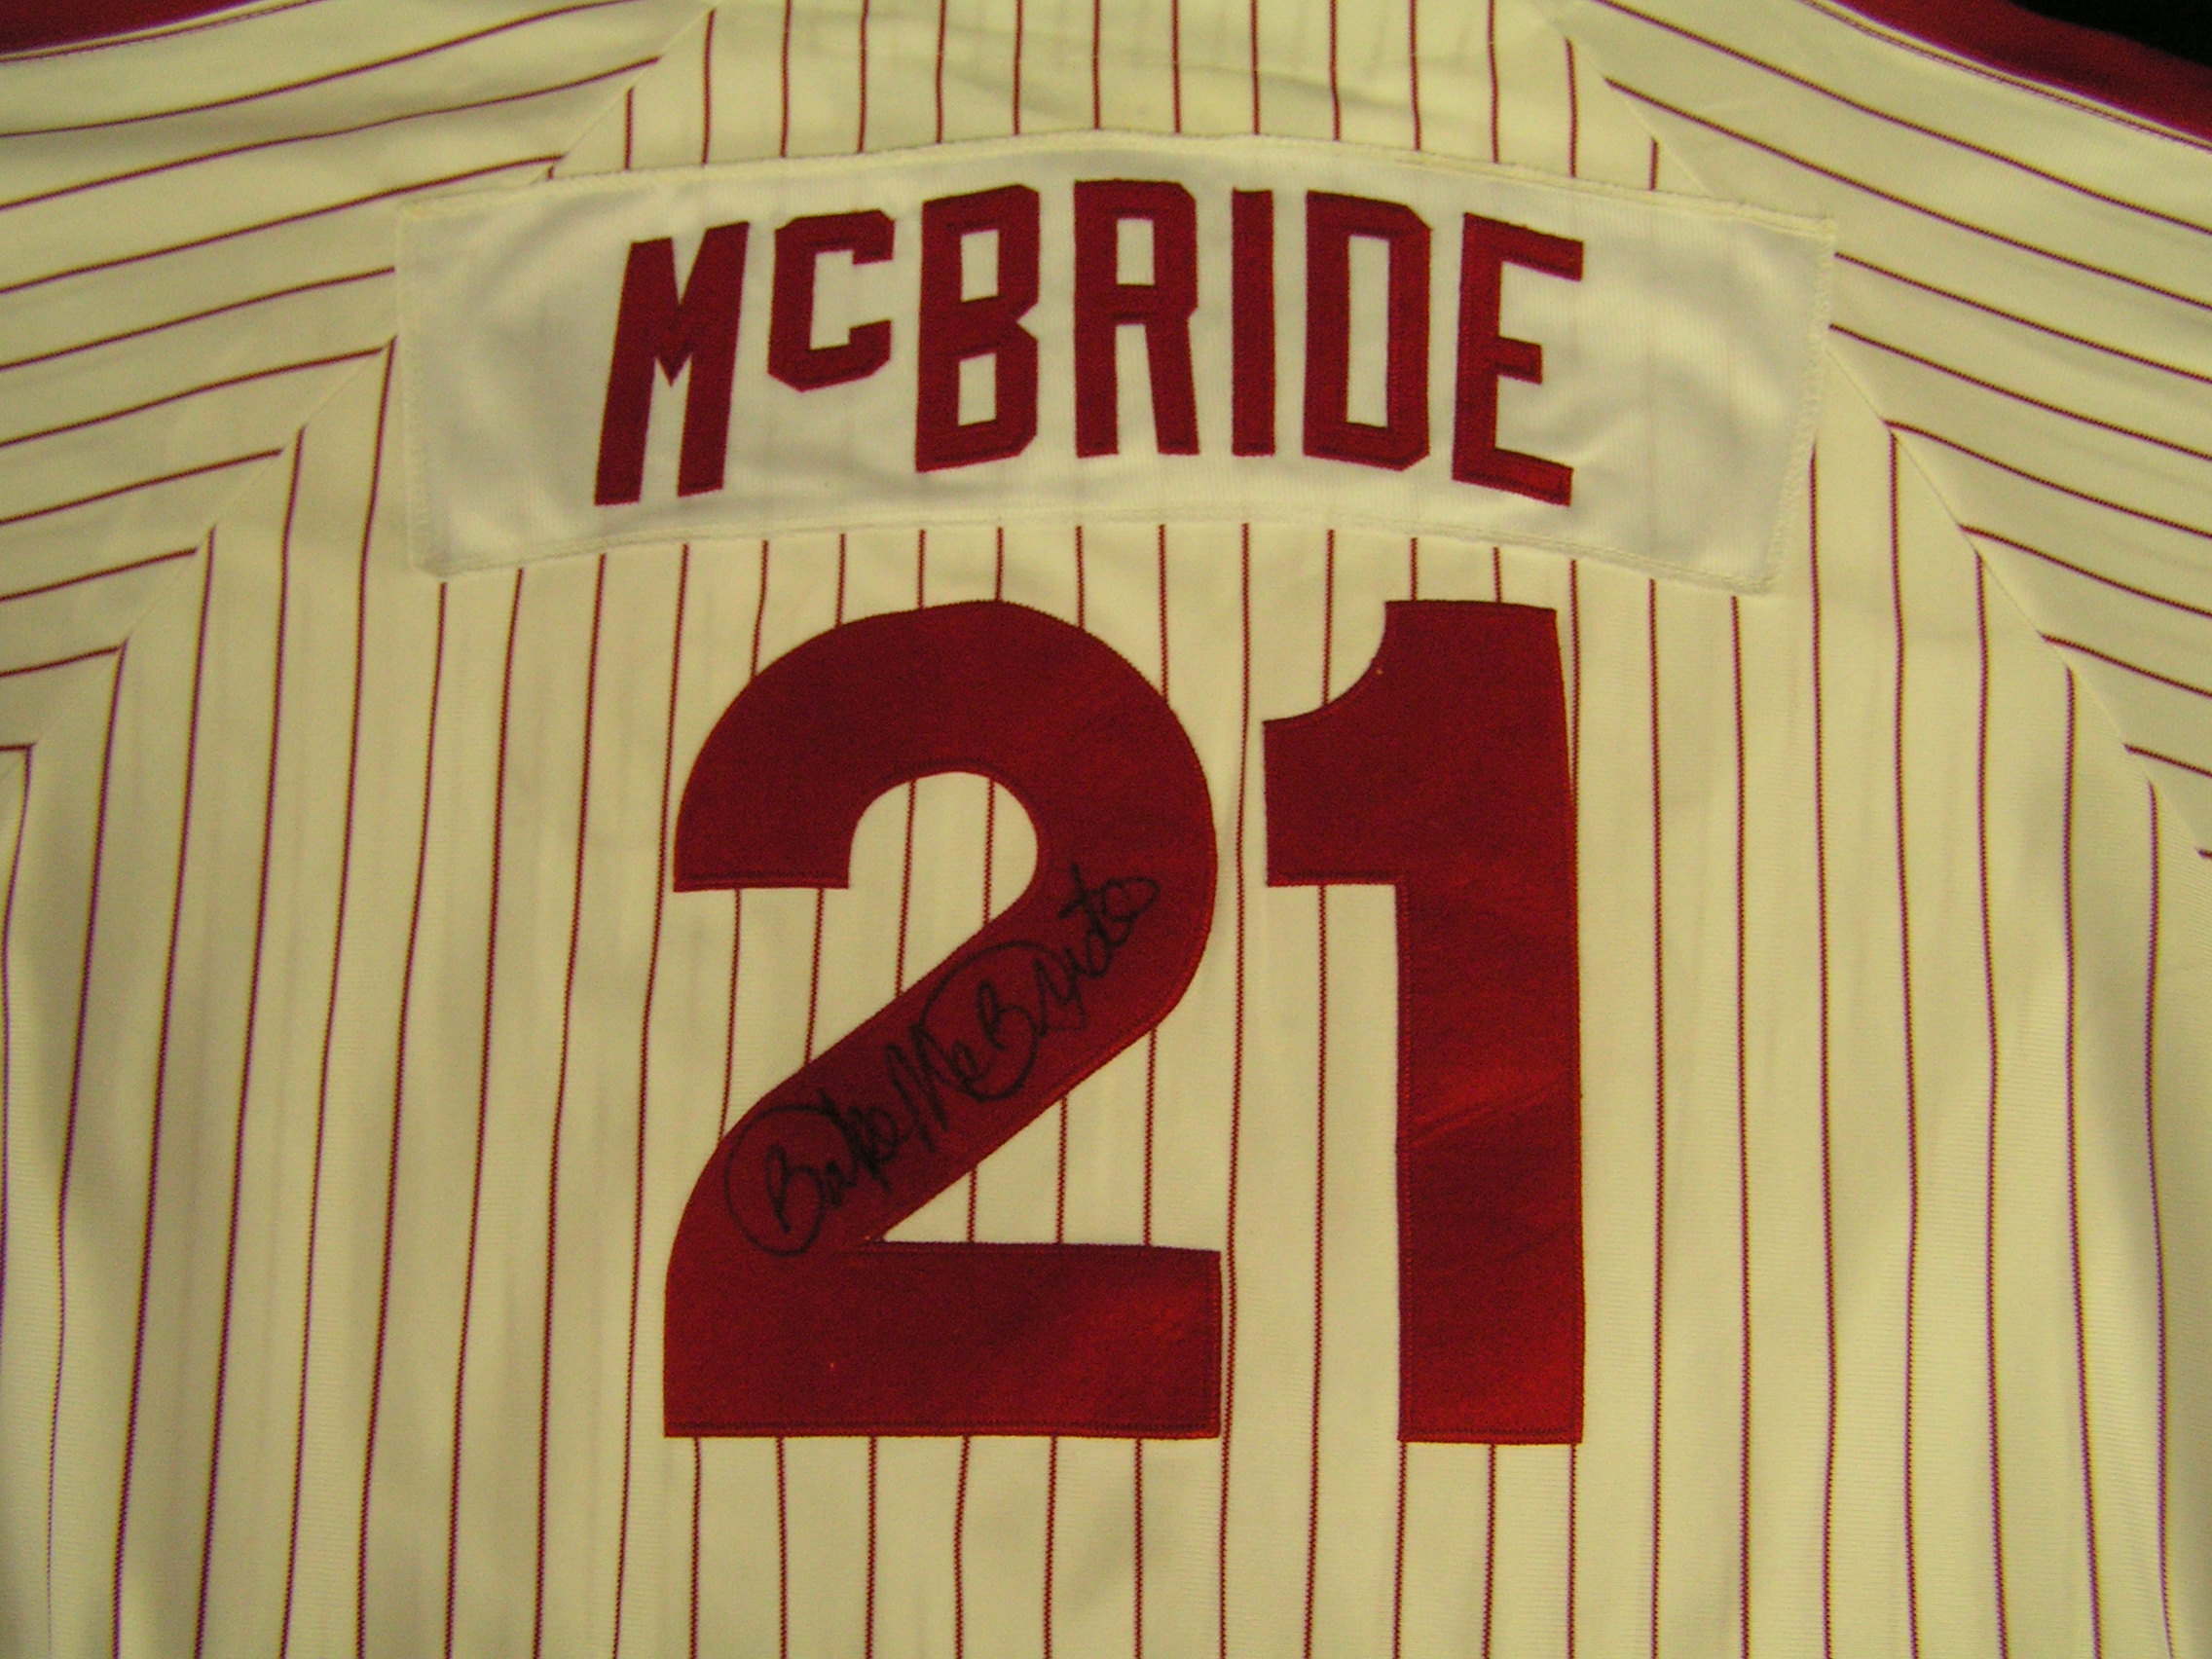 Philadelphia Phillies Bake McBride Autographed Jersey - Carls